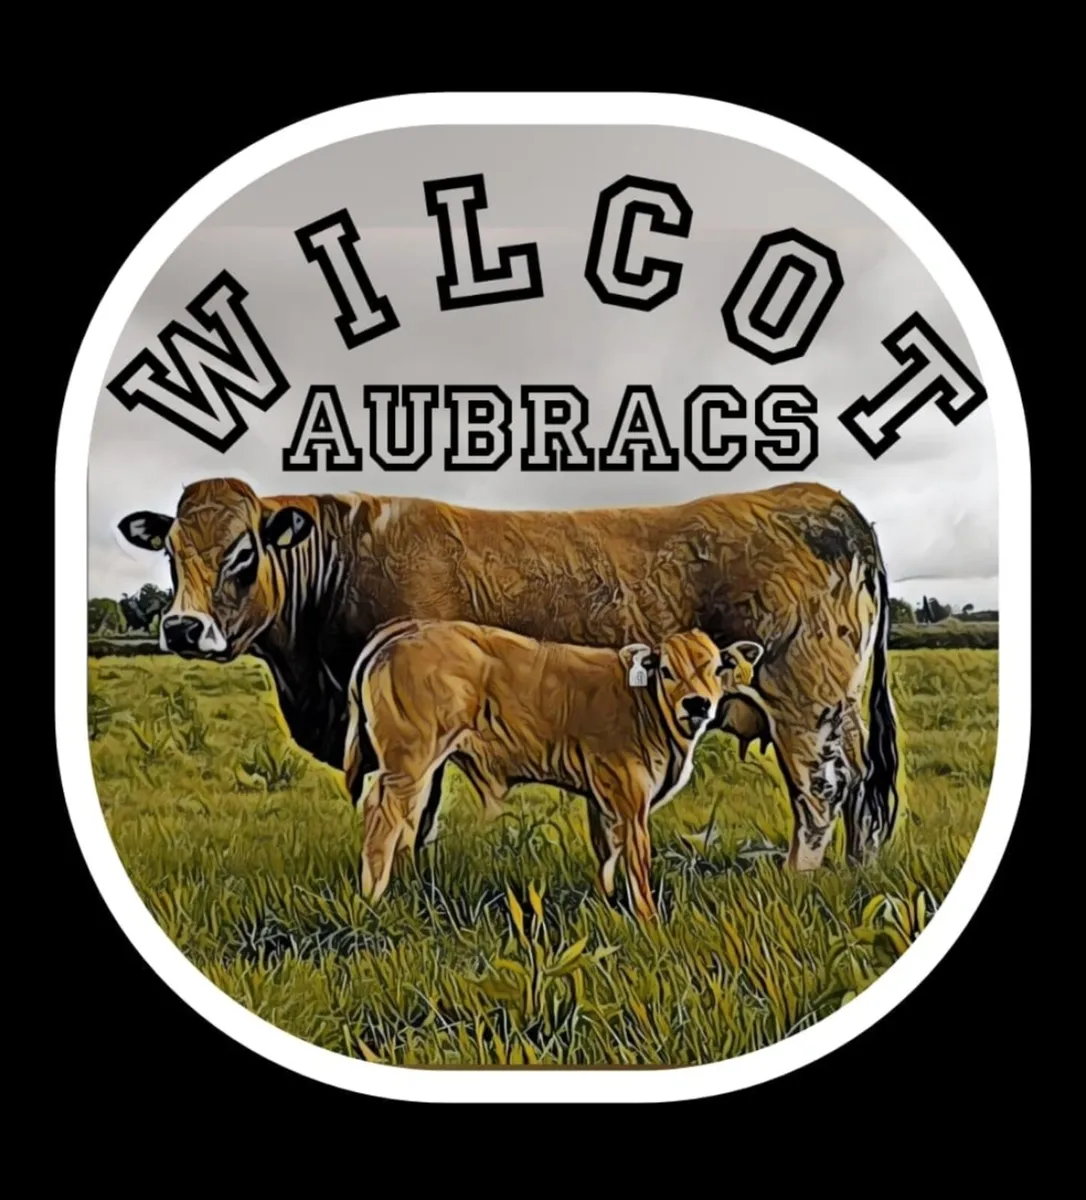 Aubrac Bulls for Sale